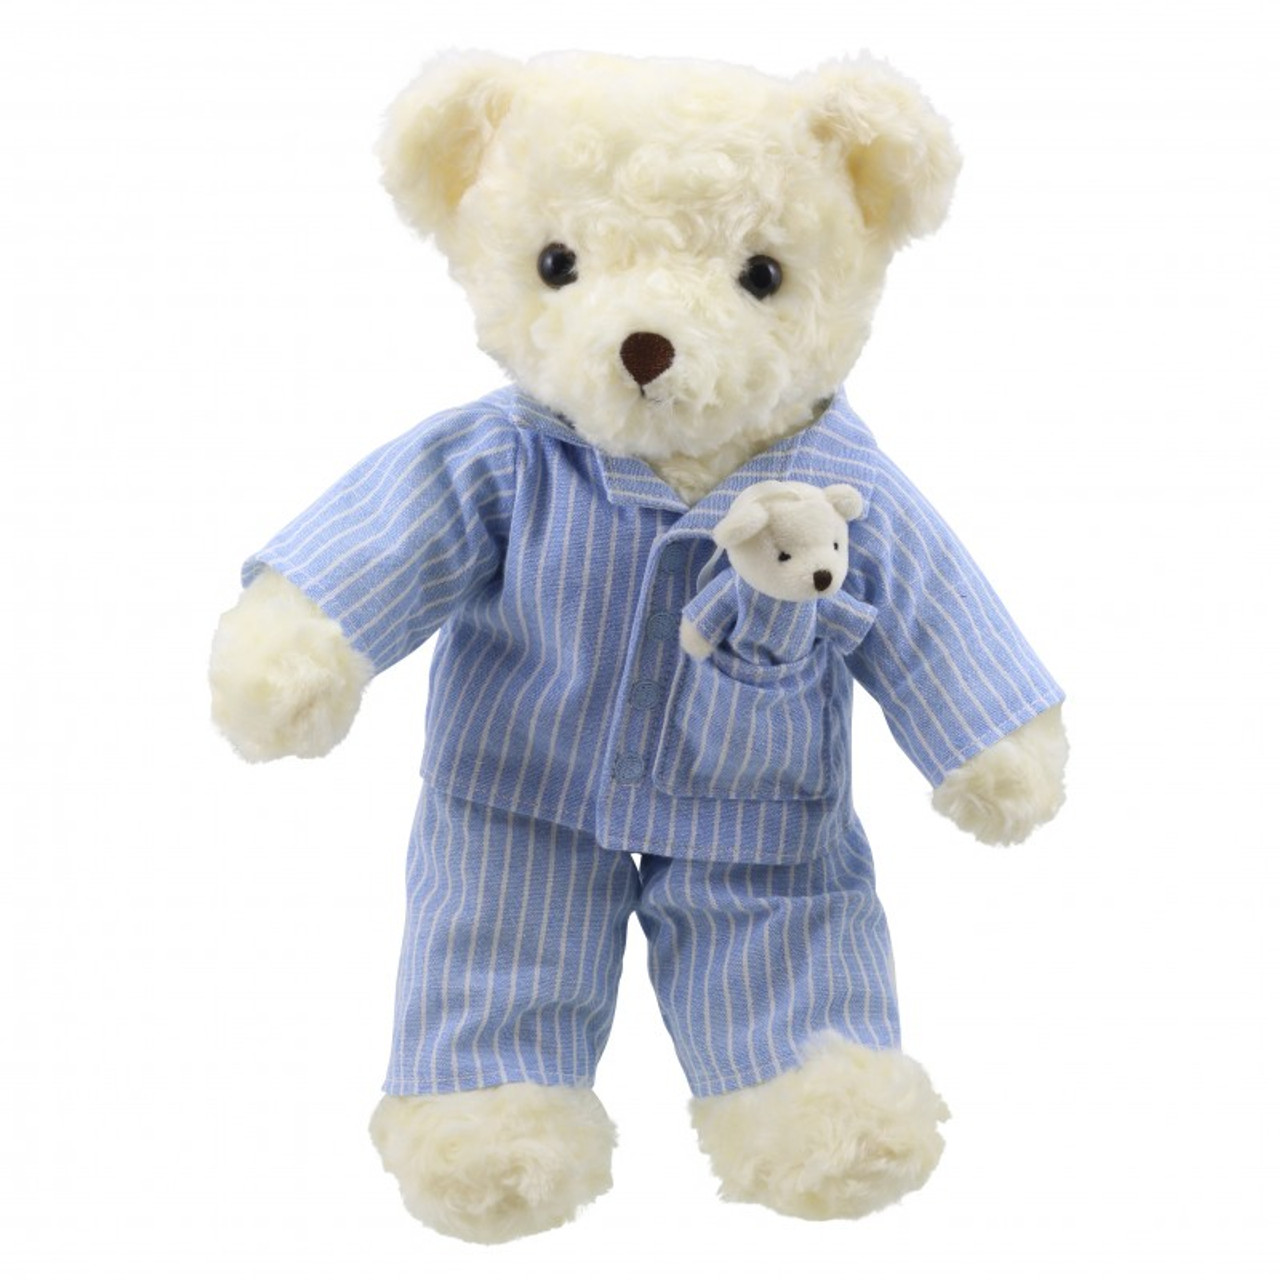 Bedtime Bear, Dressed in Pyjamas, Wilberry Teddy Bear 40cm